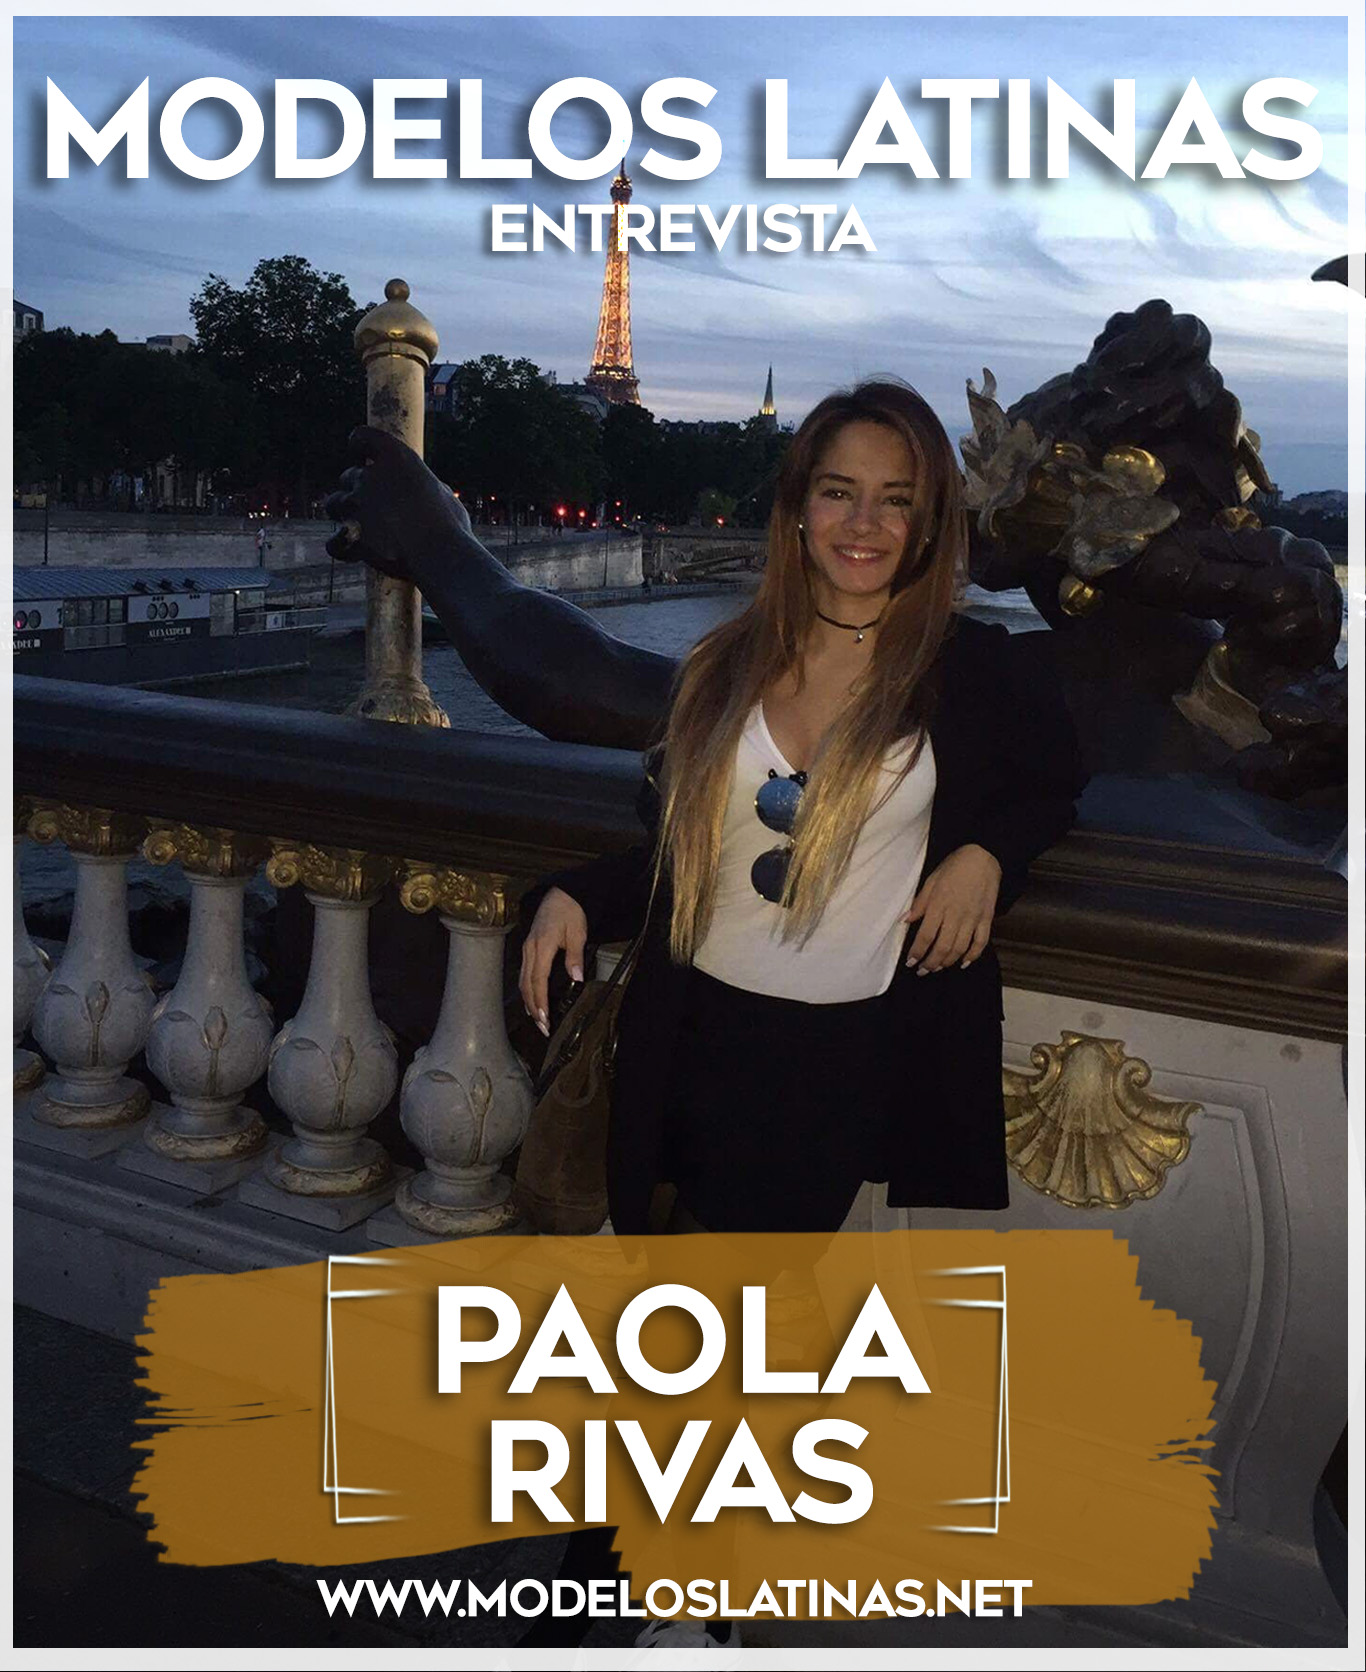 Paola Rivas: talentosa chef e influencer moderna por excelencia